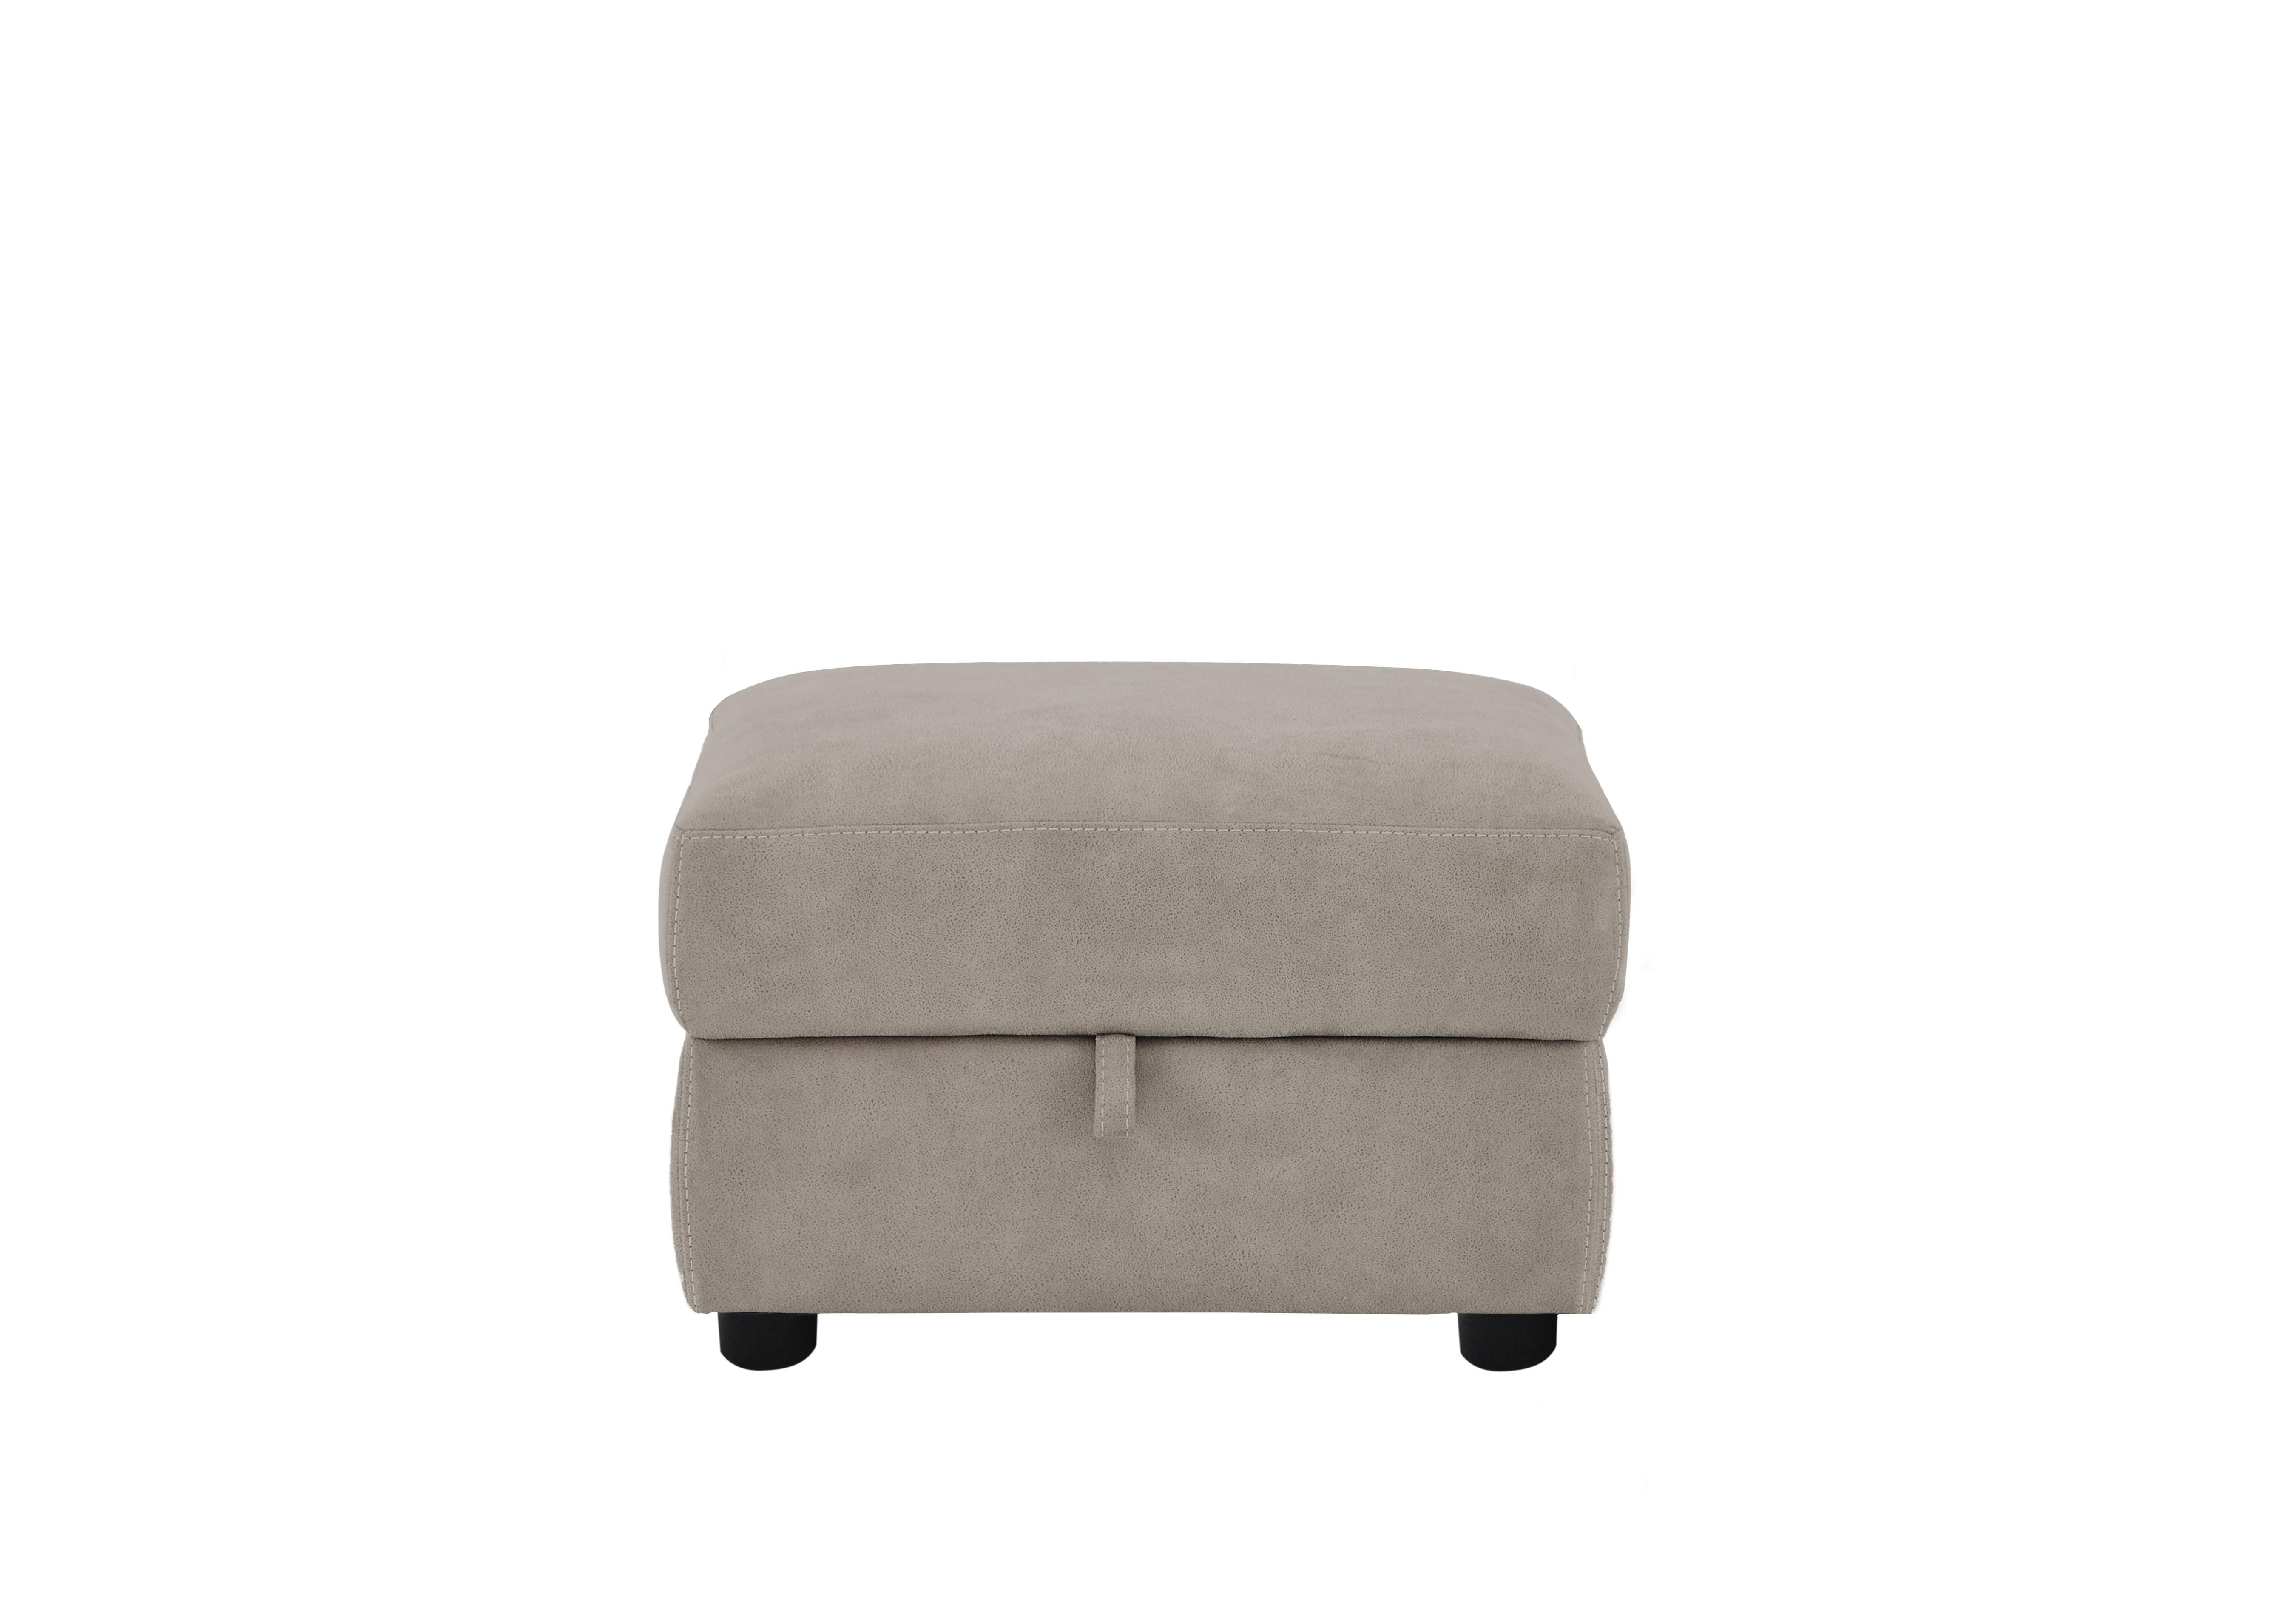 Snug Fabric Storage Footstool in Bfa-Blj-R946 Silver on Furniture Village